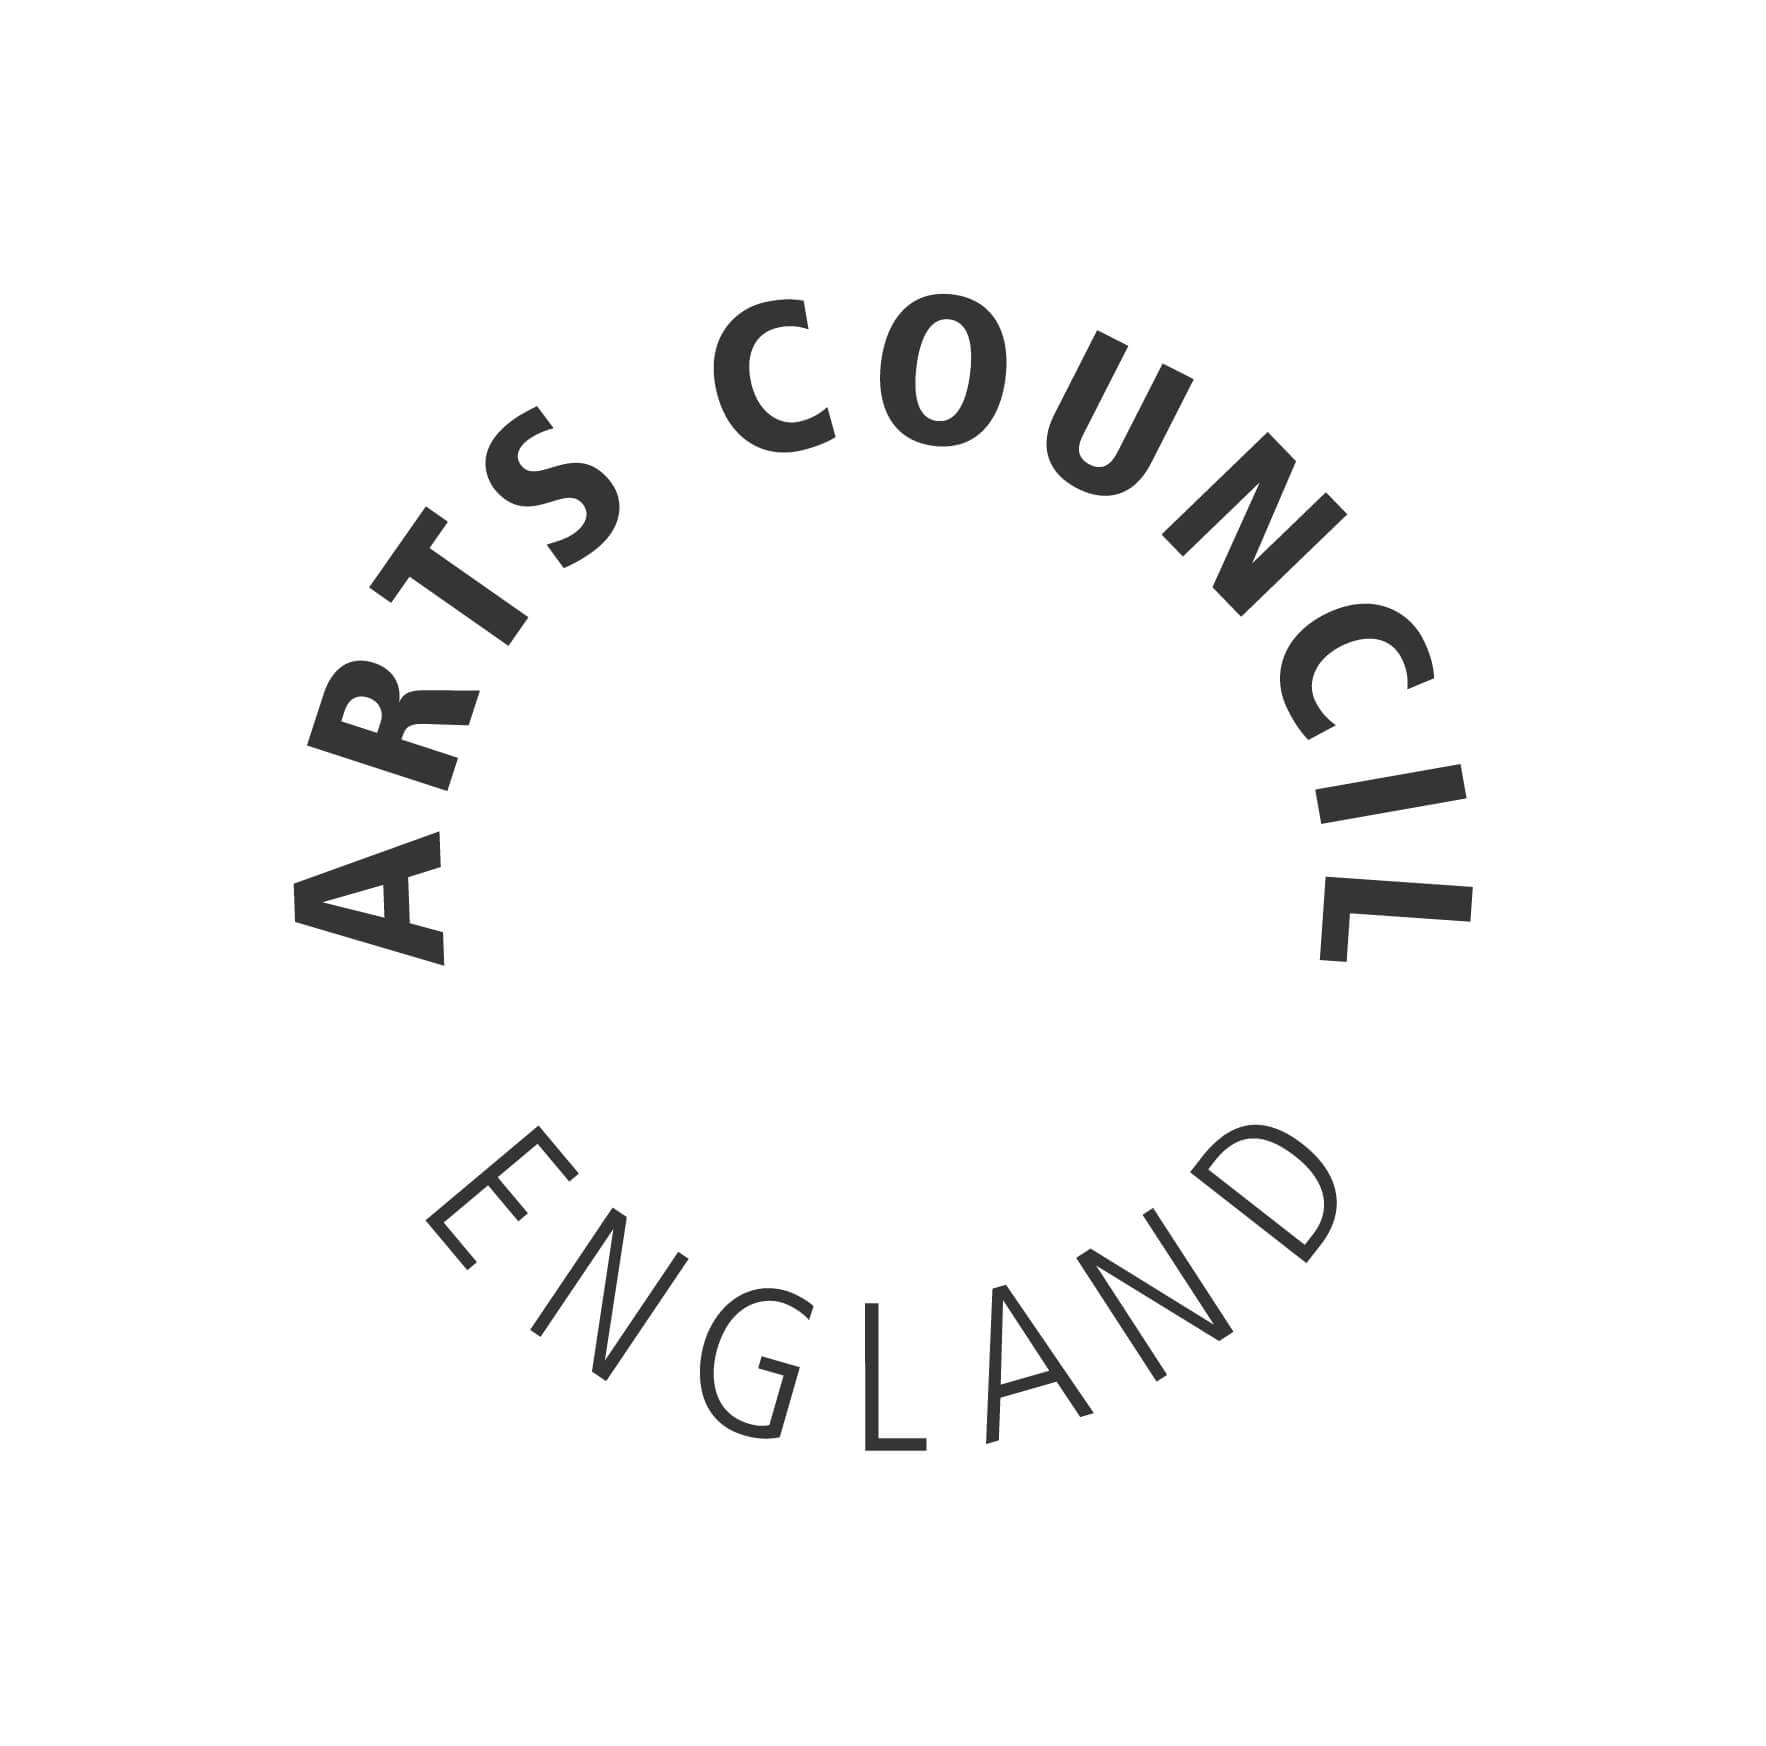 Arts-council-logo.jpg